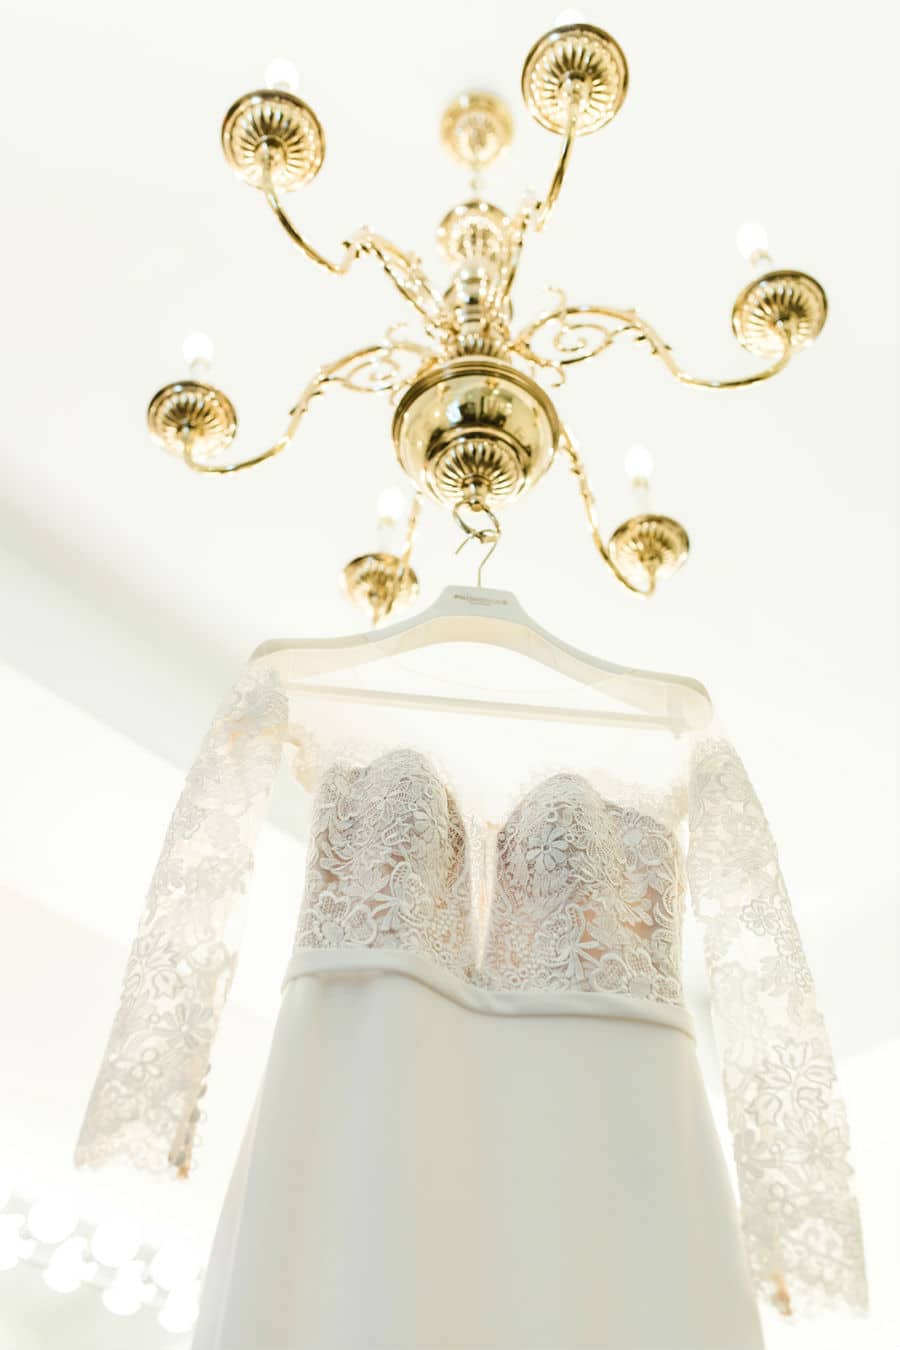 Bride's dress hanging from chandelier